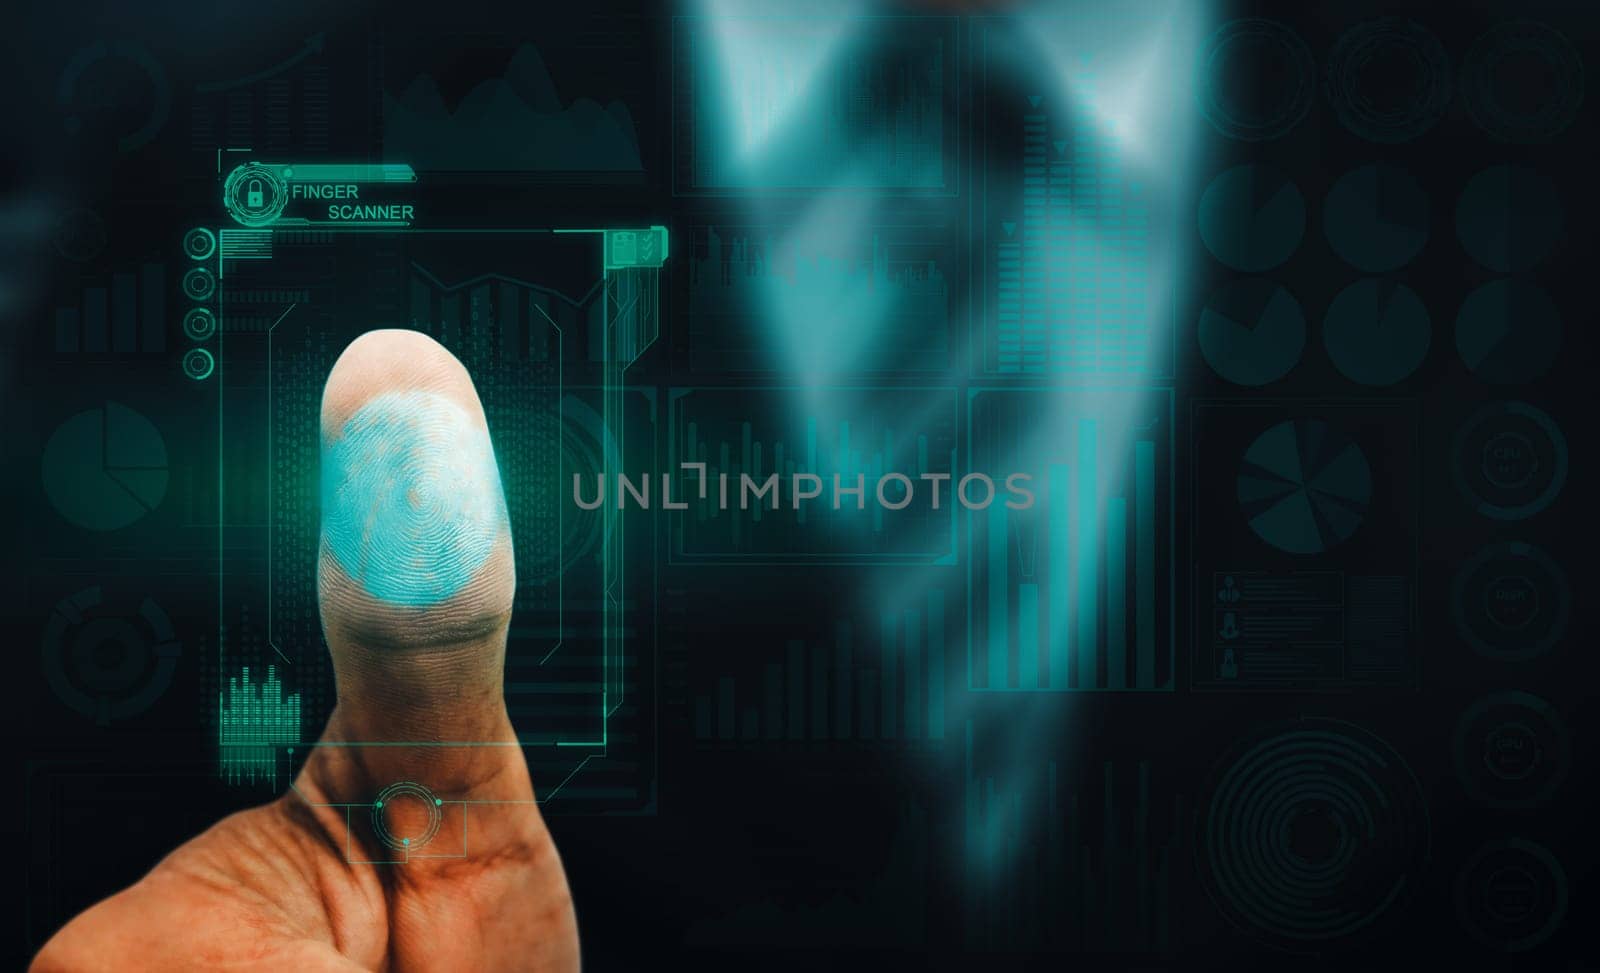 Fingerprint Biometric Digital Scan Technology. uds by biancoblue